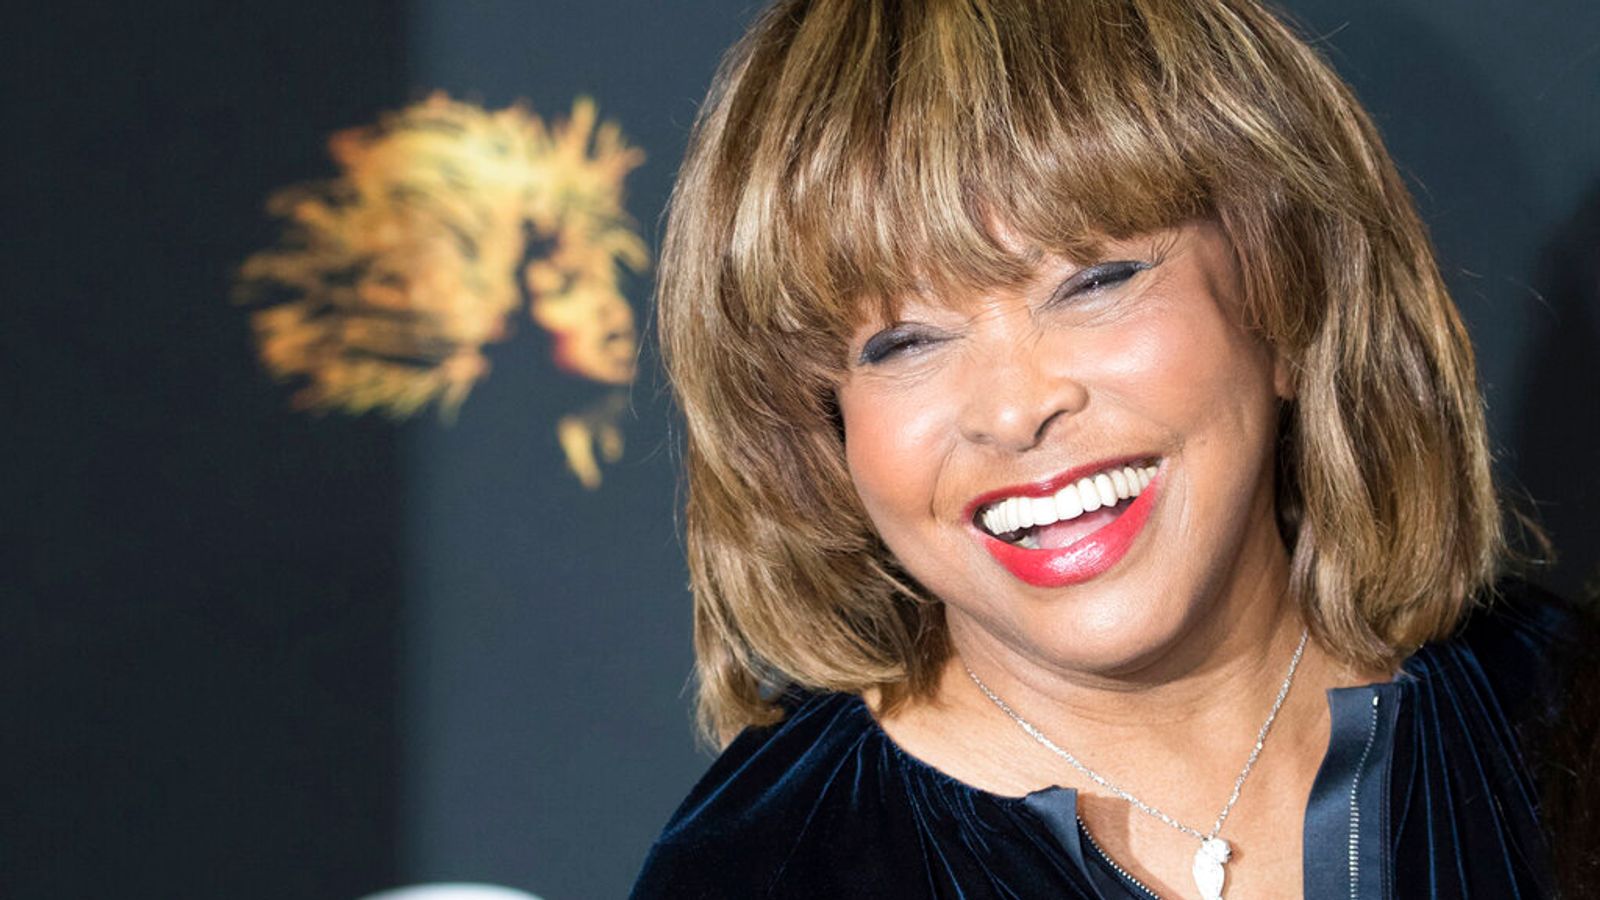 BREAKING: Tina Turner, ‘Queen of Rock ‘n’ Roll’, dies aged 83 in Switzerland